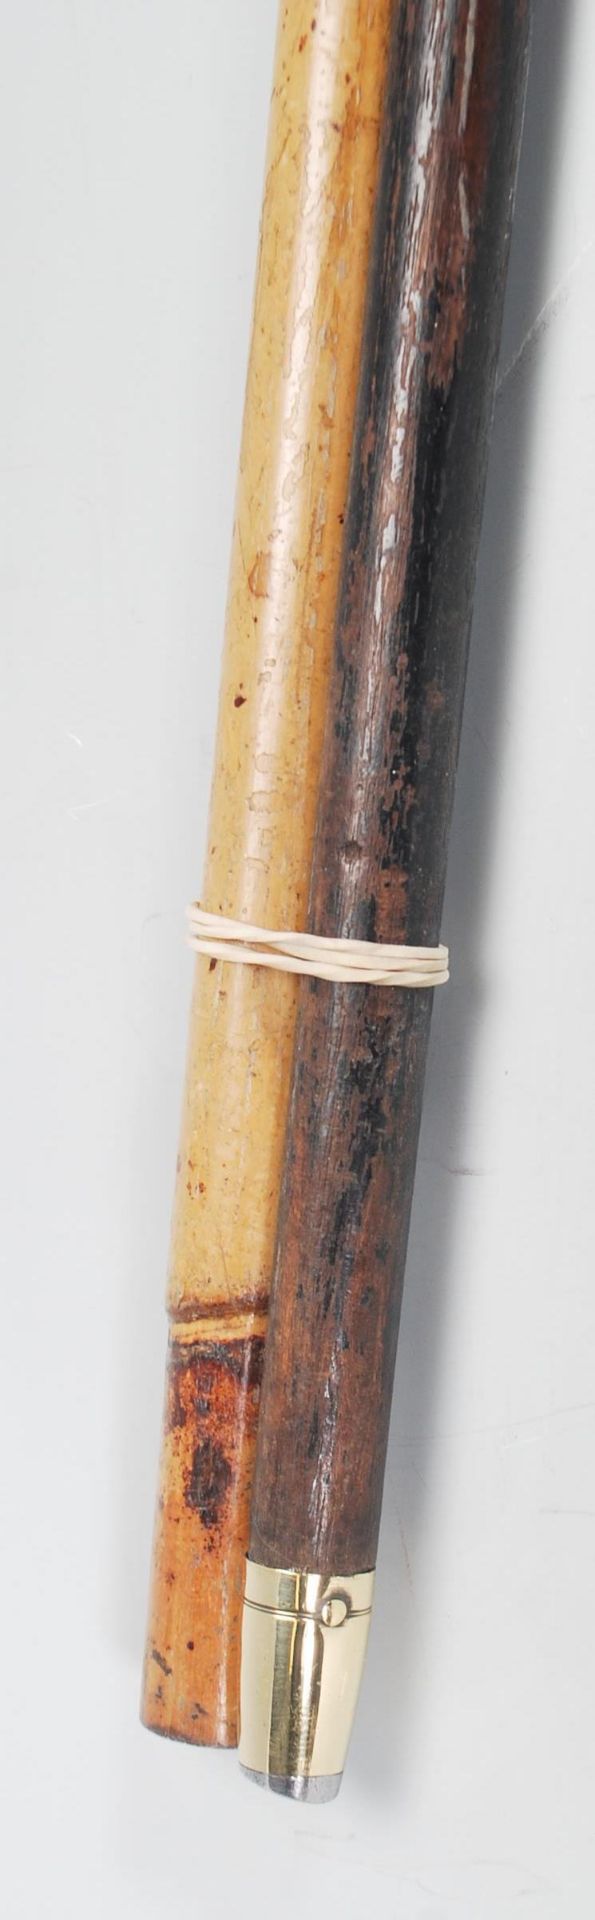 A pair of 20th century wooden walking sticks havin - Image 9 of 9